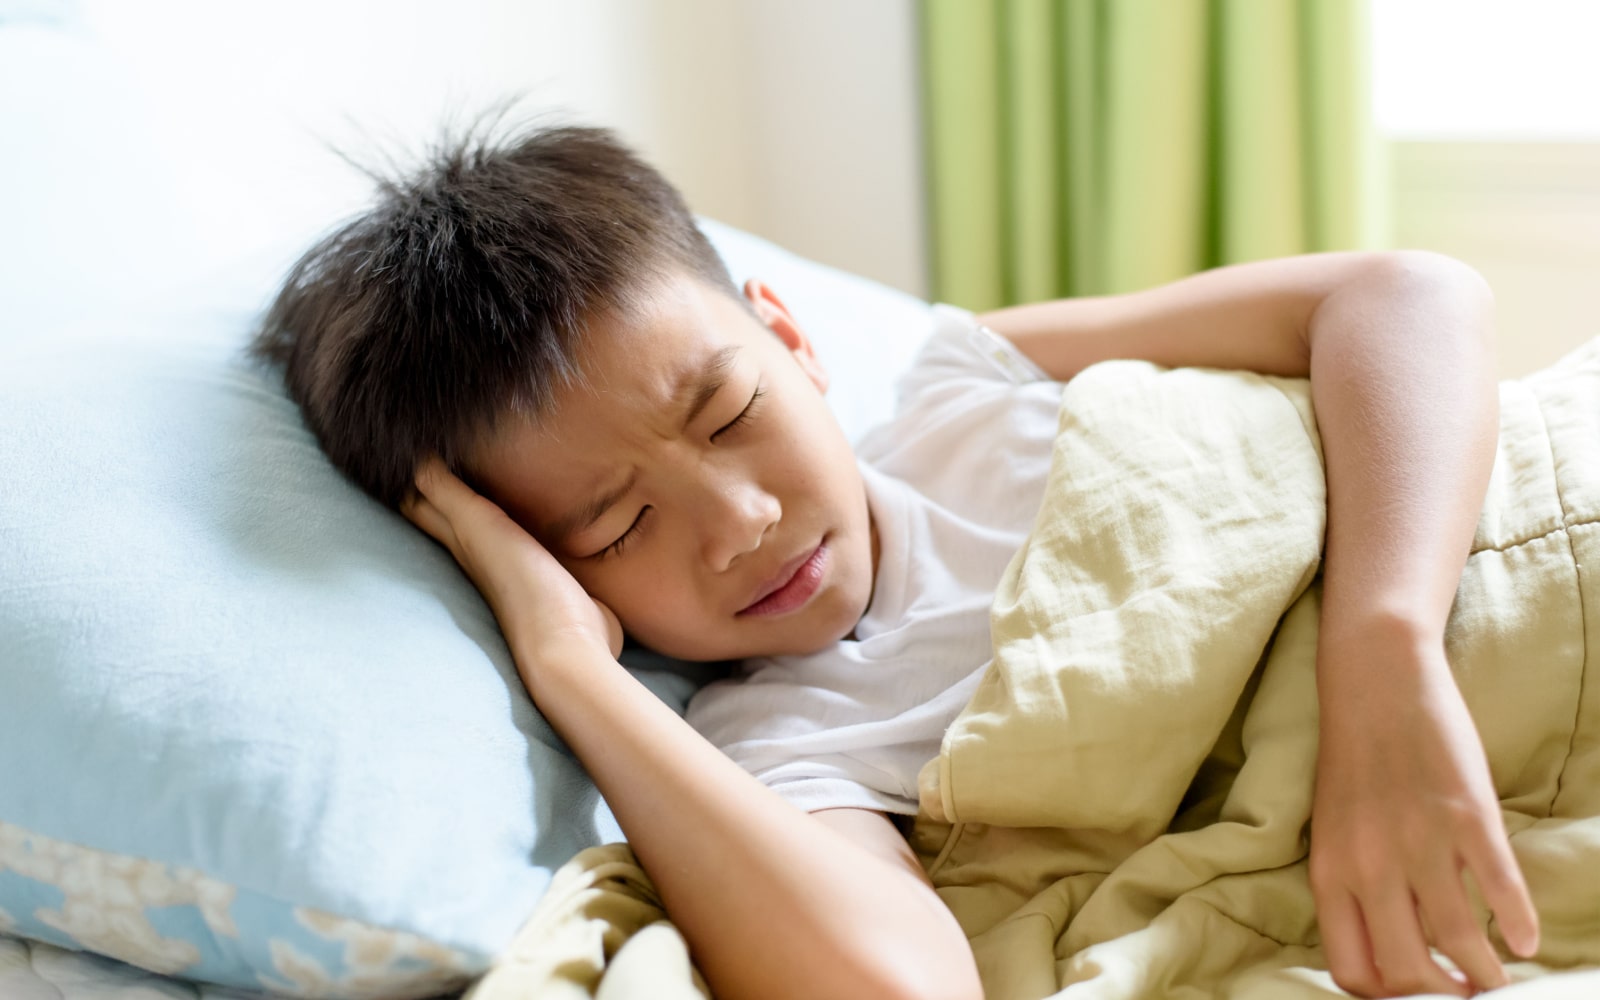 Child experiencing problems with sleep due to sleep apnea